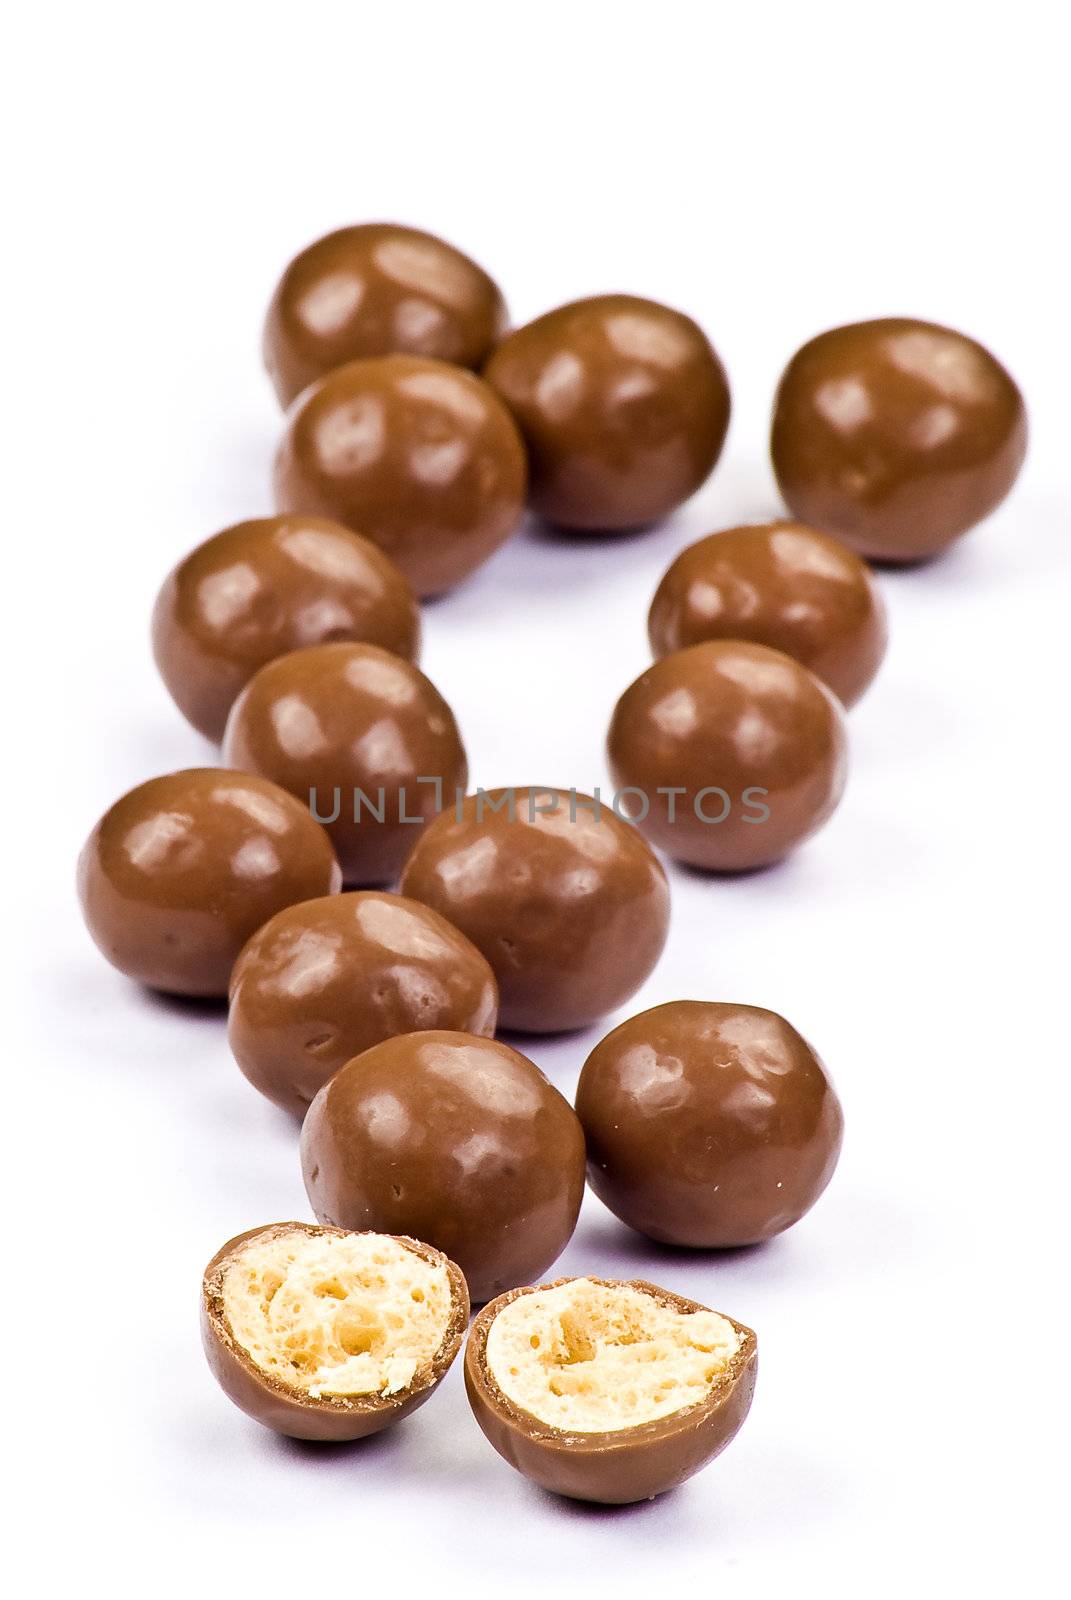 Chocolate balls by caldix